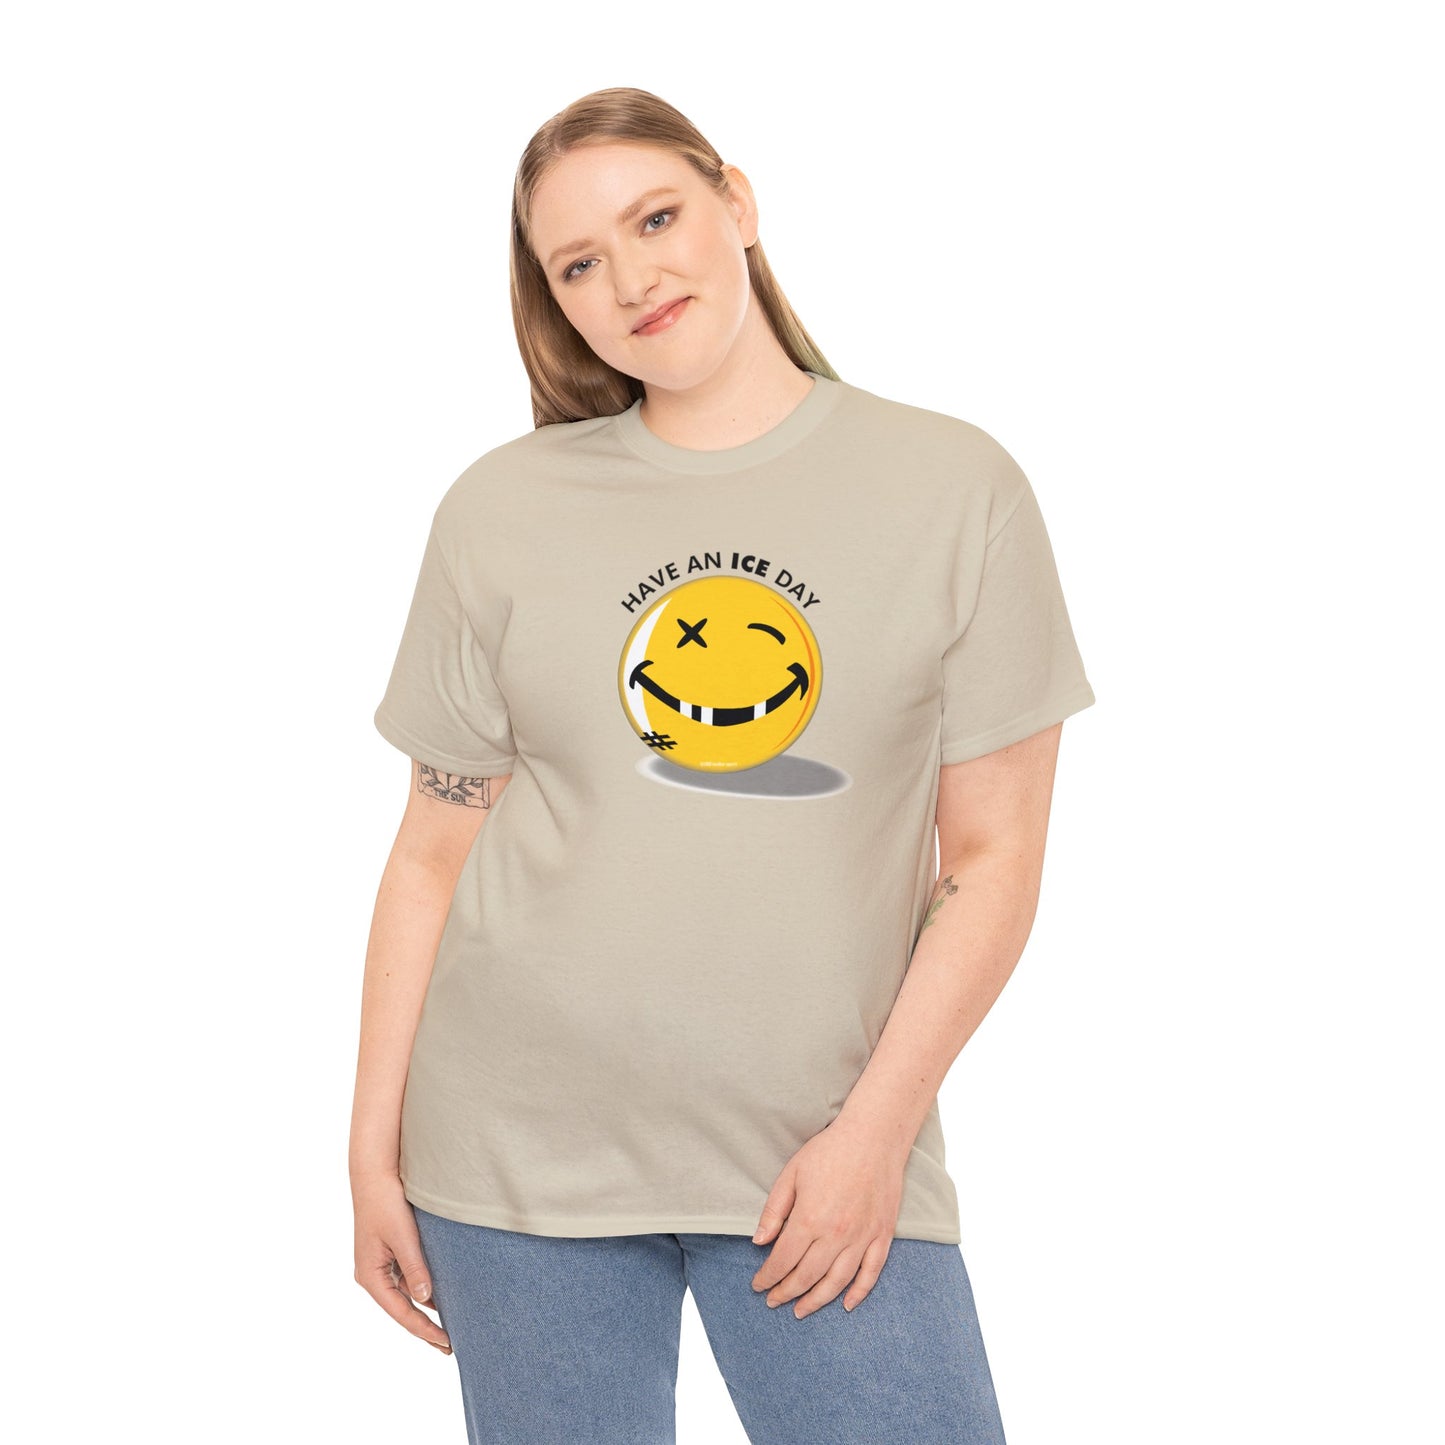 Have an Ice Day, Funny Hockey T-Shirt, Happy Face Missing Teeth and Black Eye, Fun Hockey Parody, Hockey T-Shirt Design